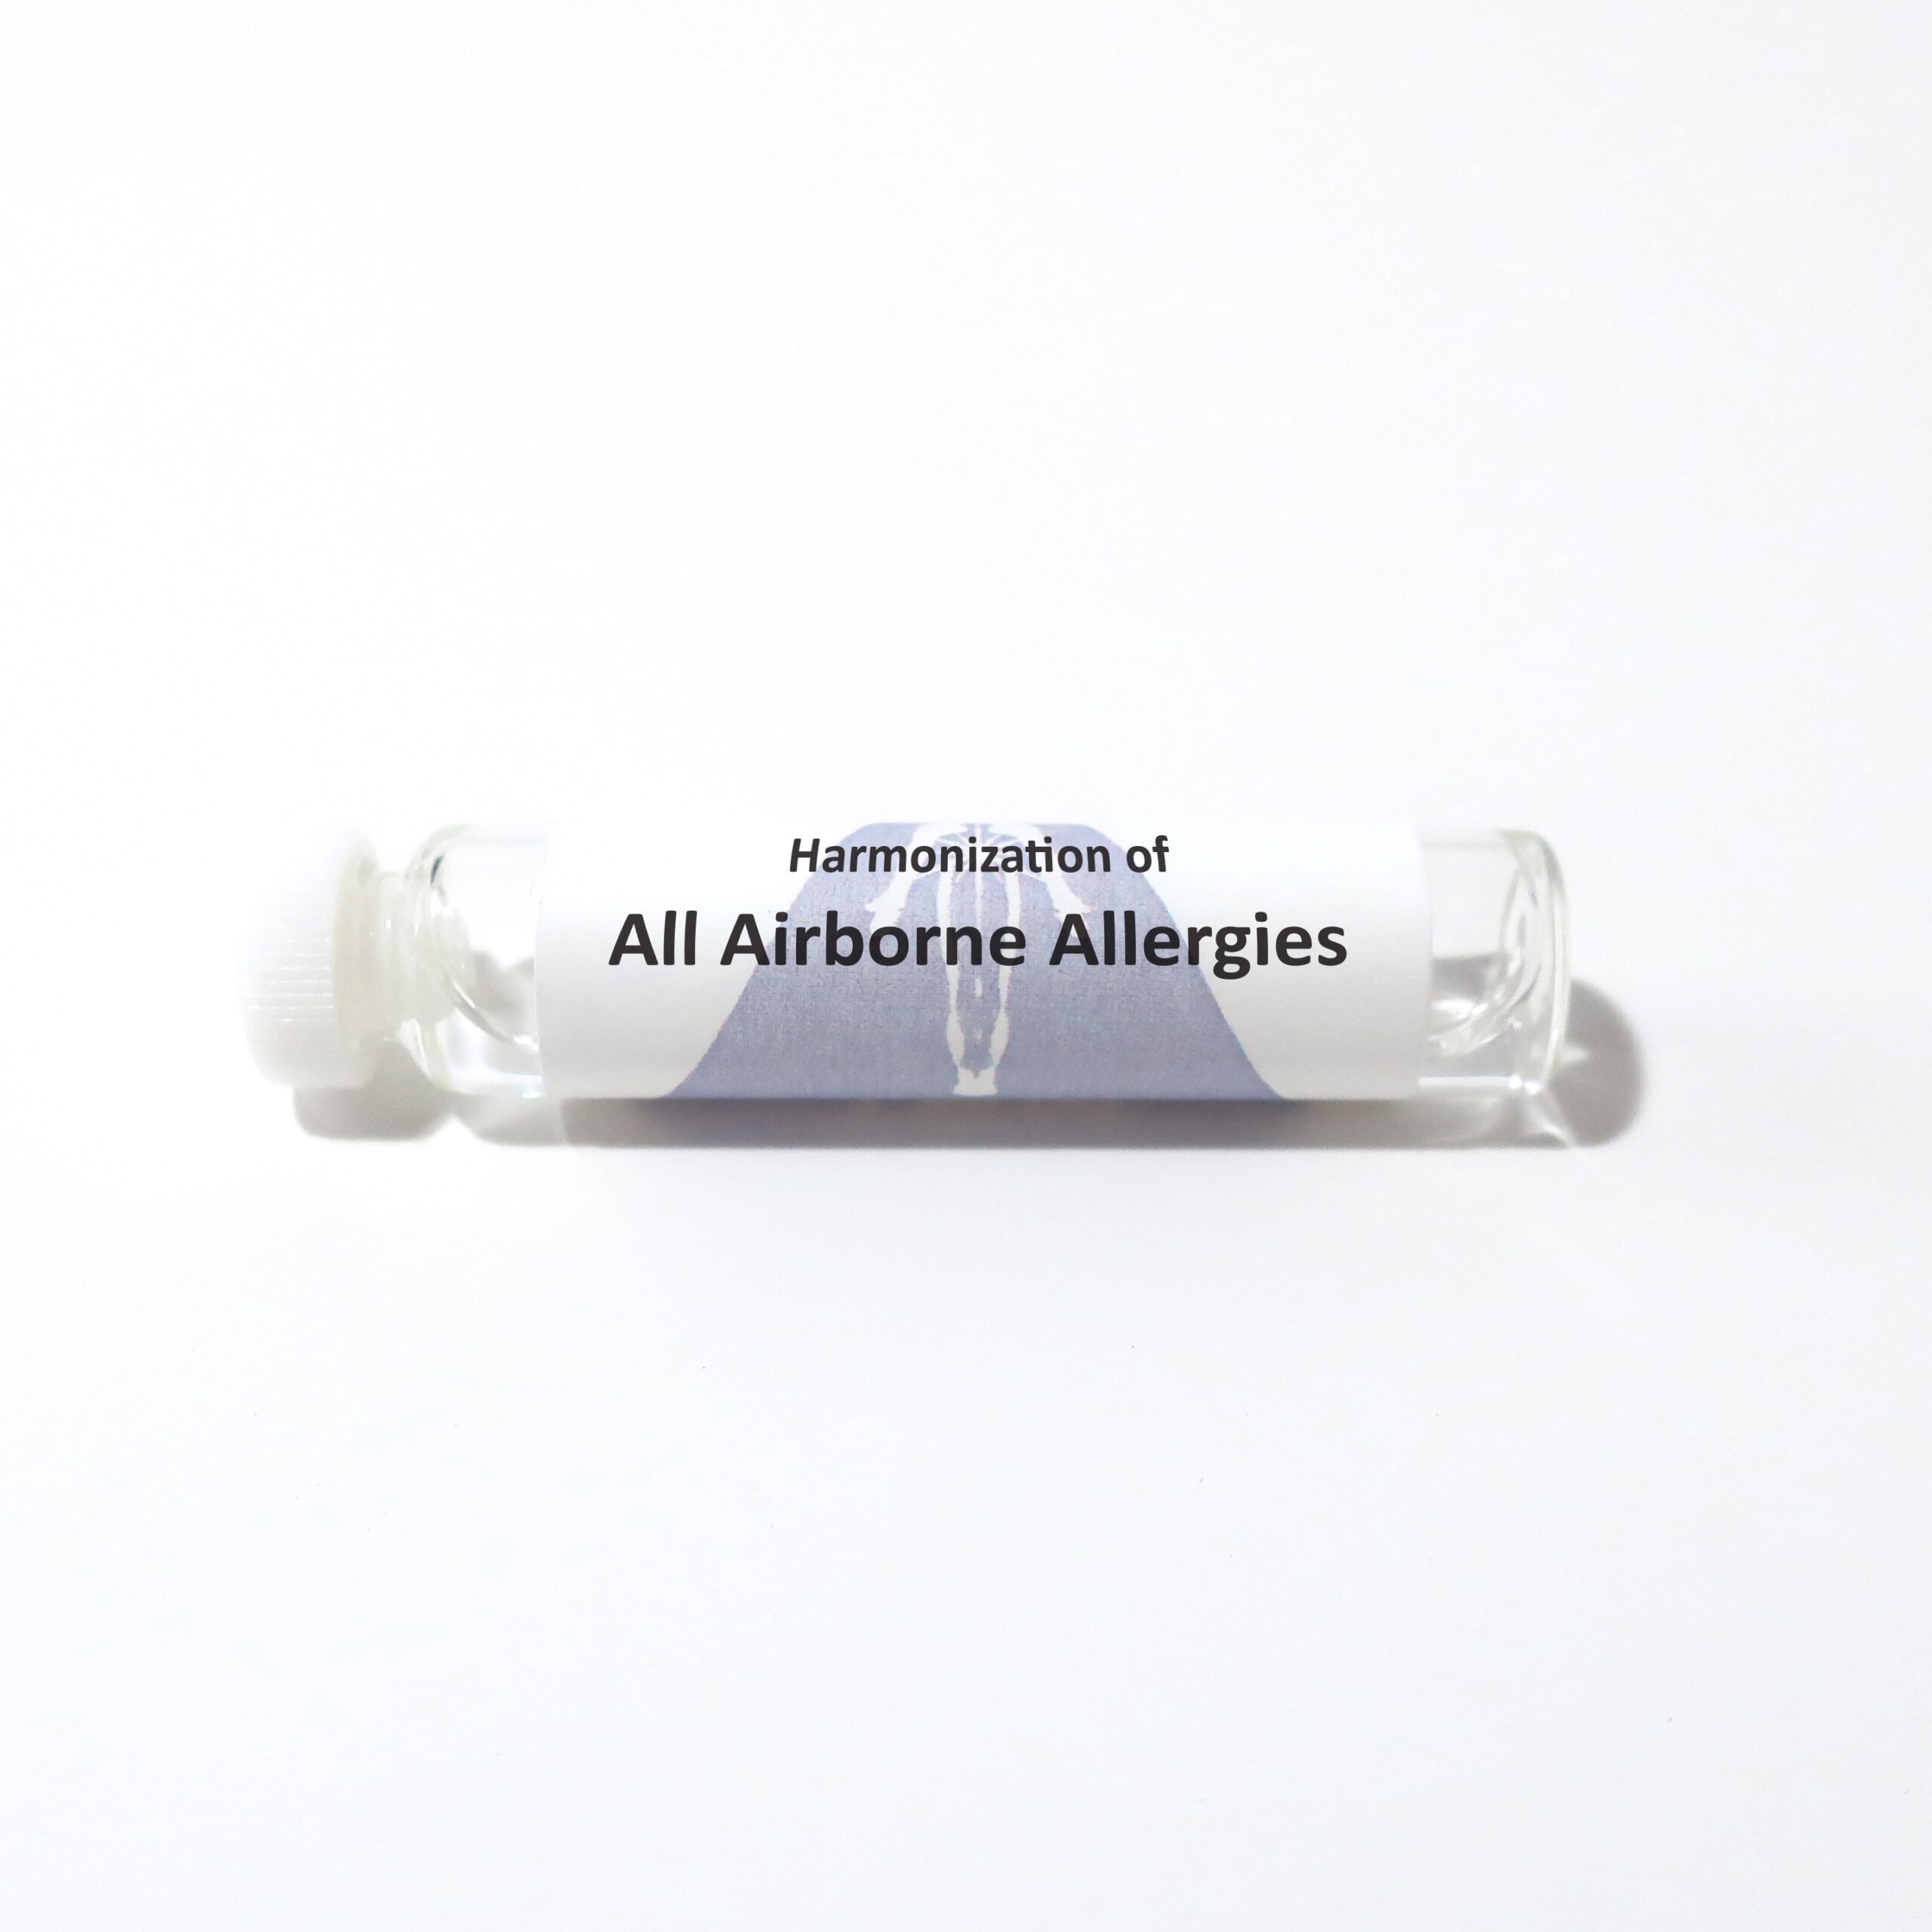 All Airborne Allergies